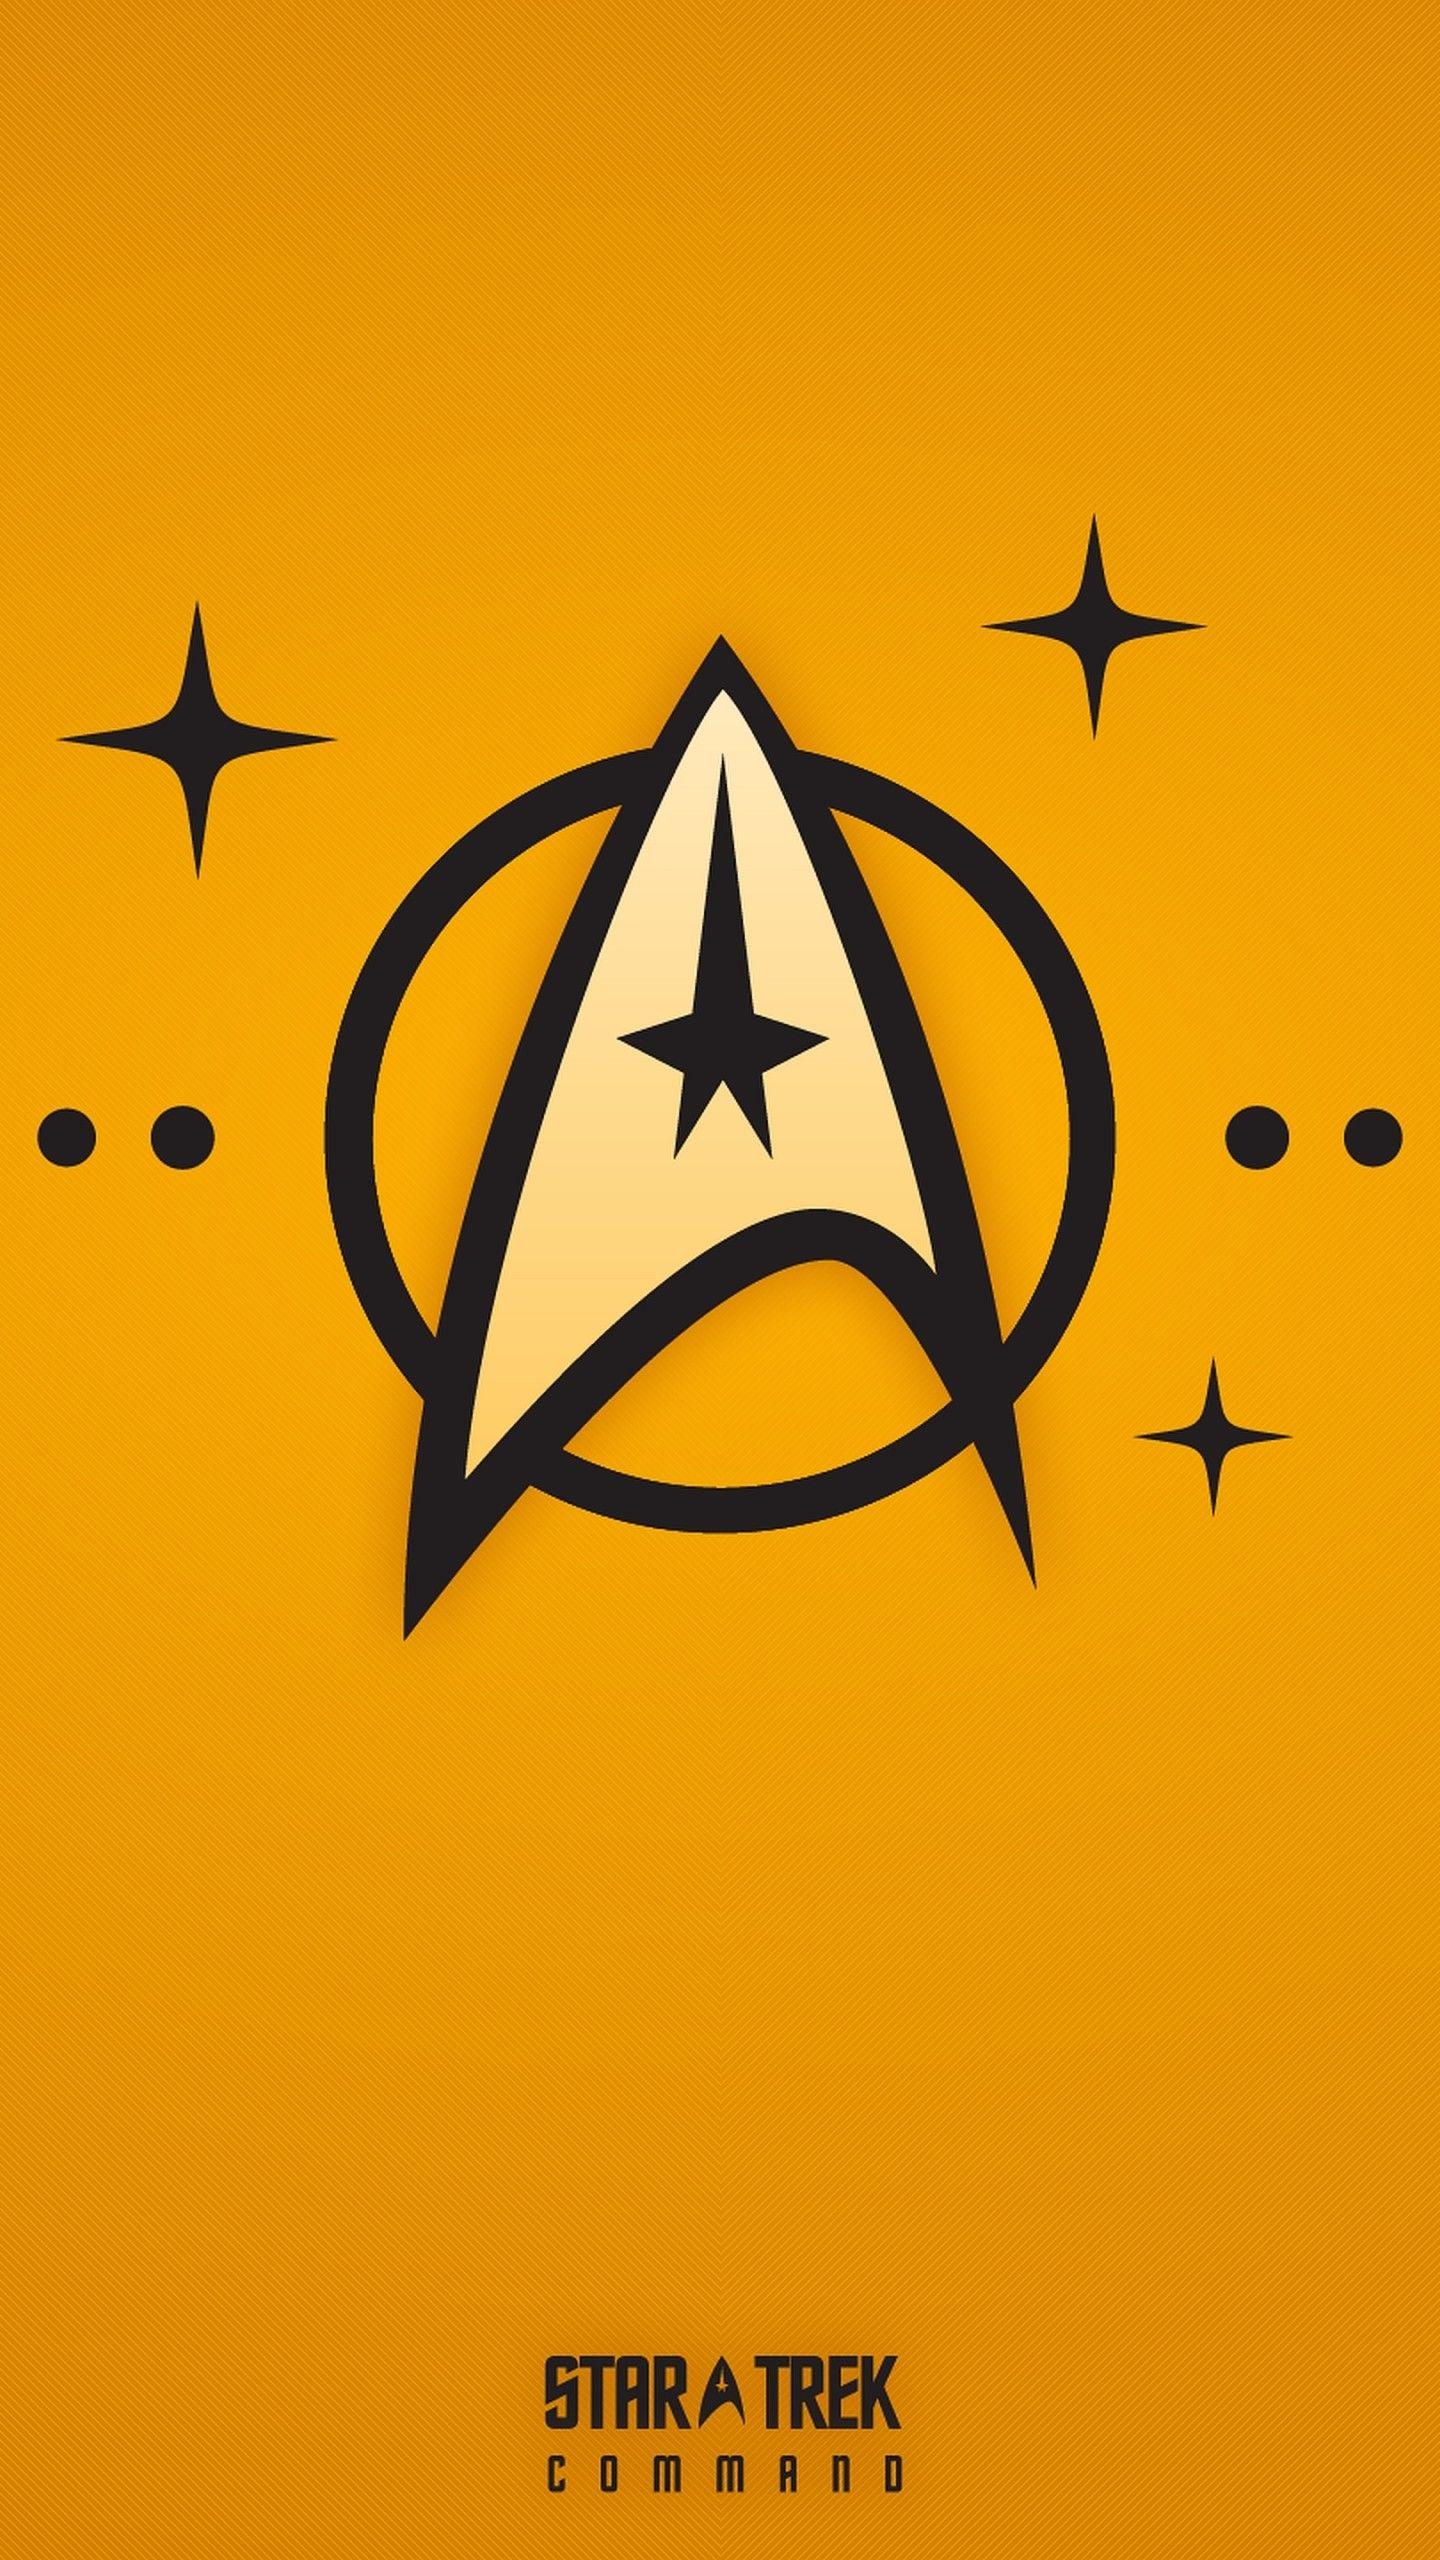 Star Trek iPhone Wallpapers - Top Free